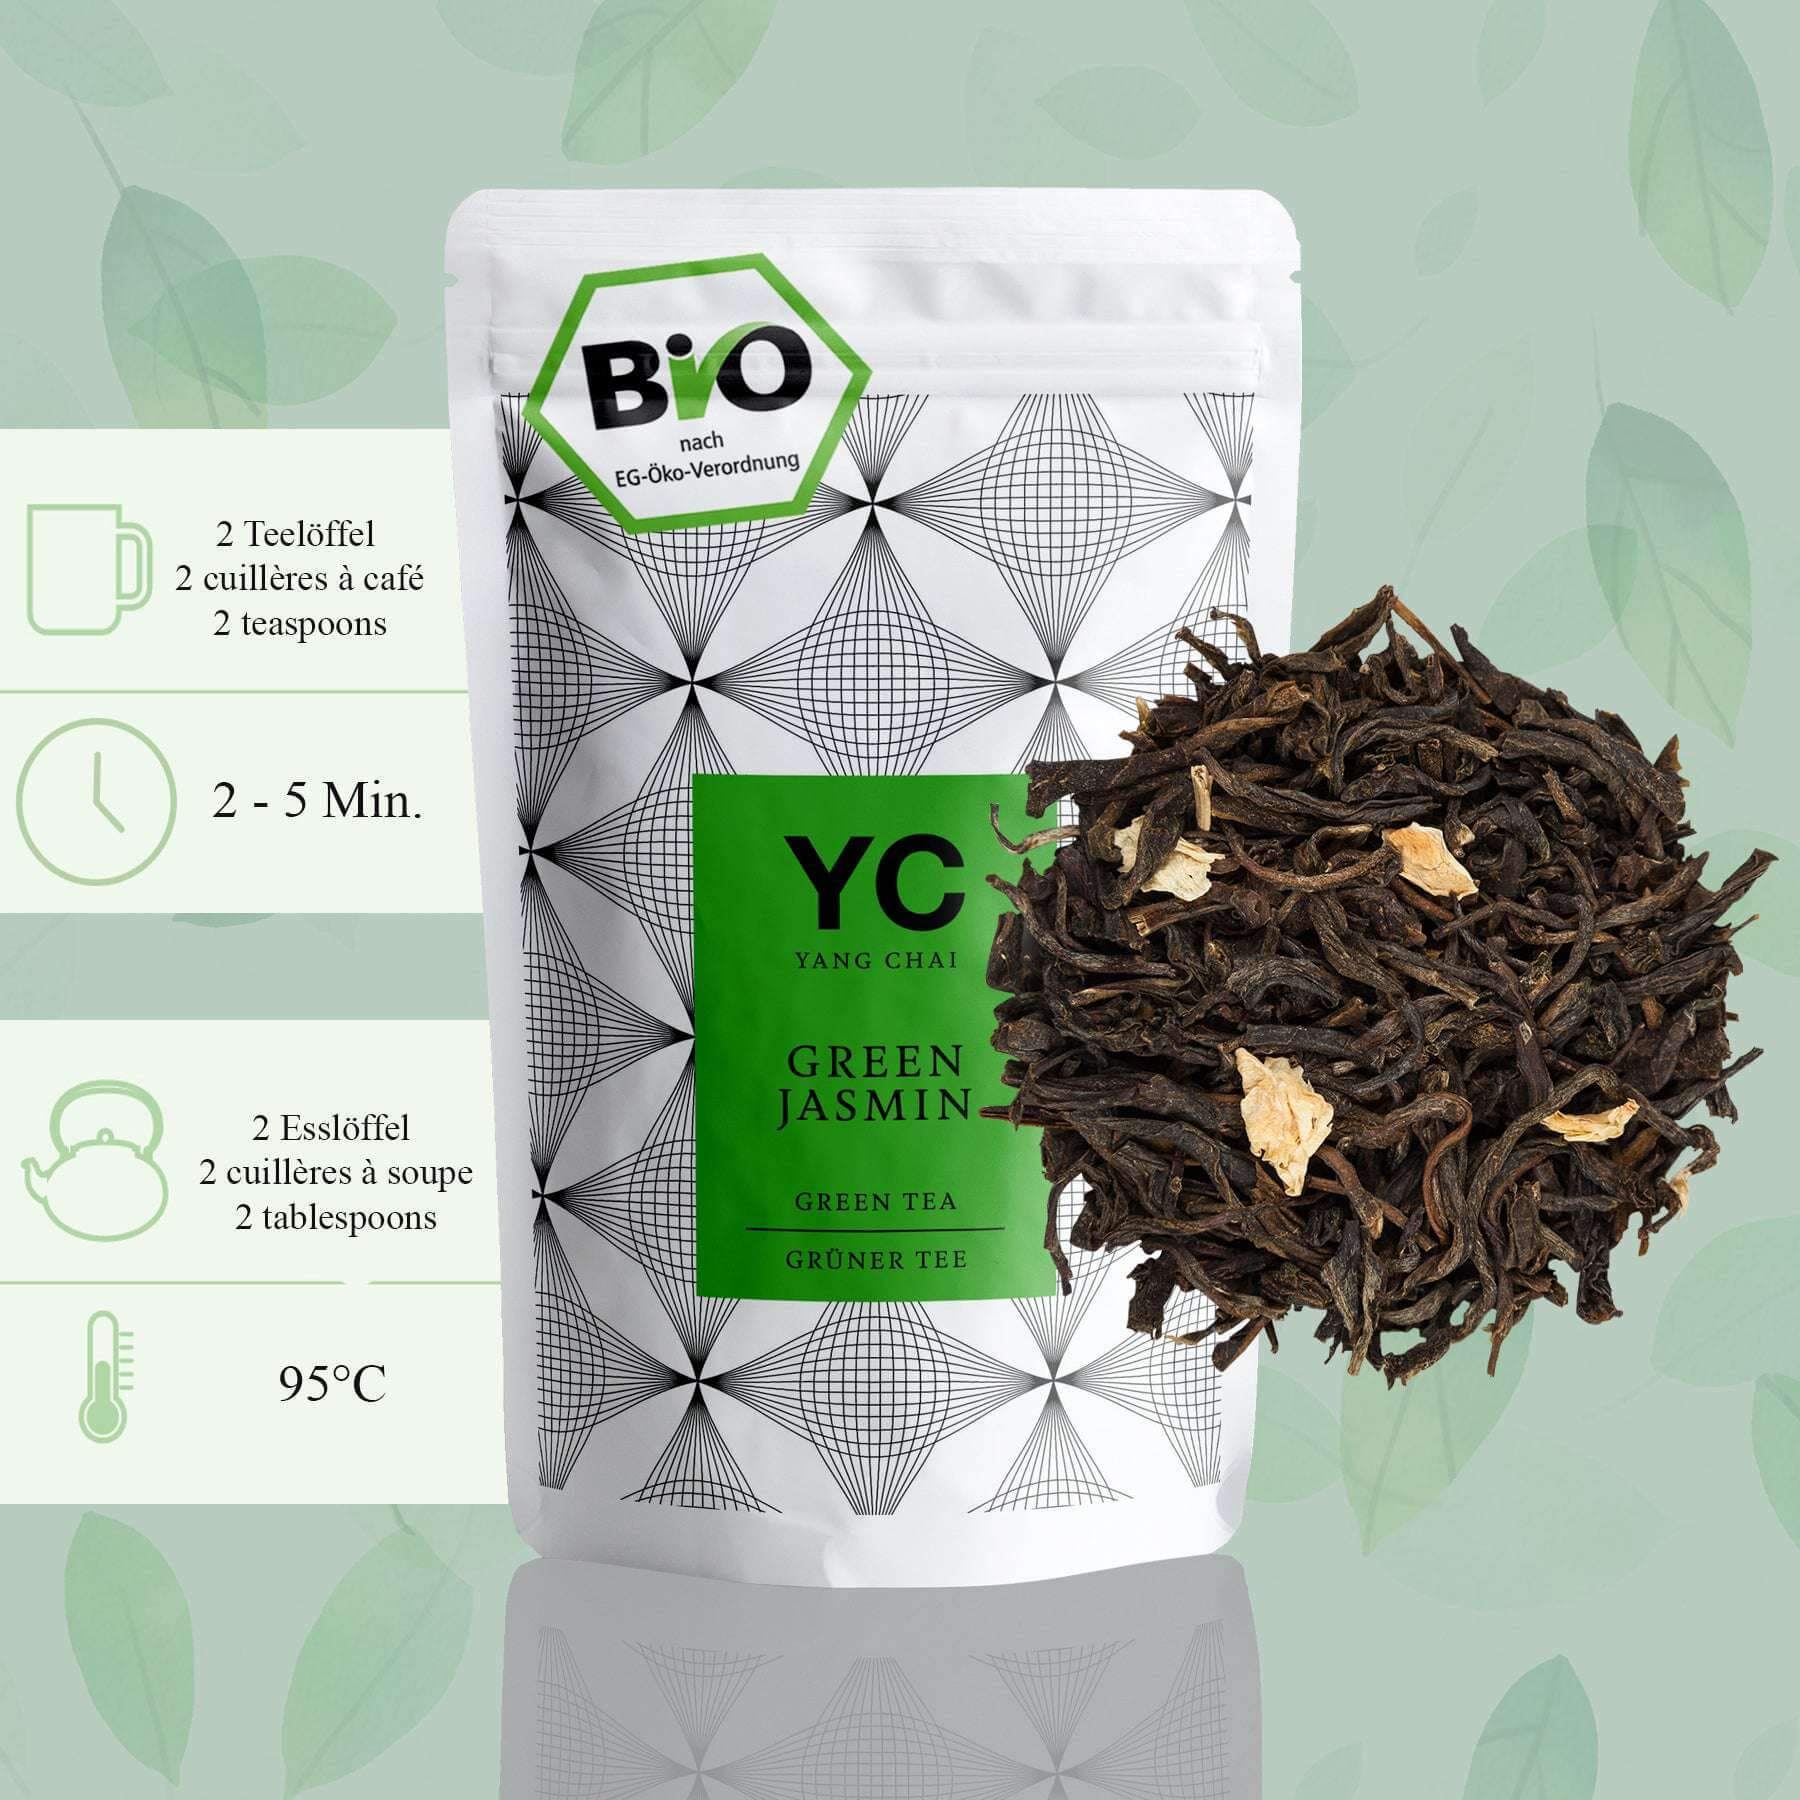 YC Yang Chai Premium Bio Grüner Jasmintee 